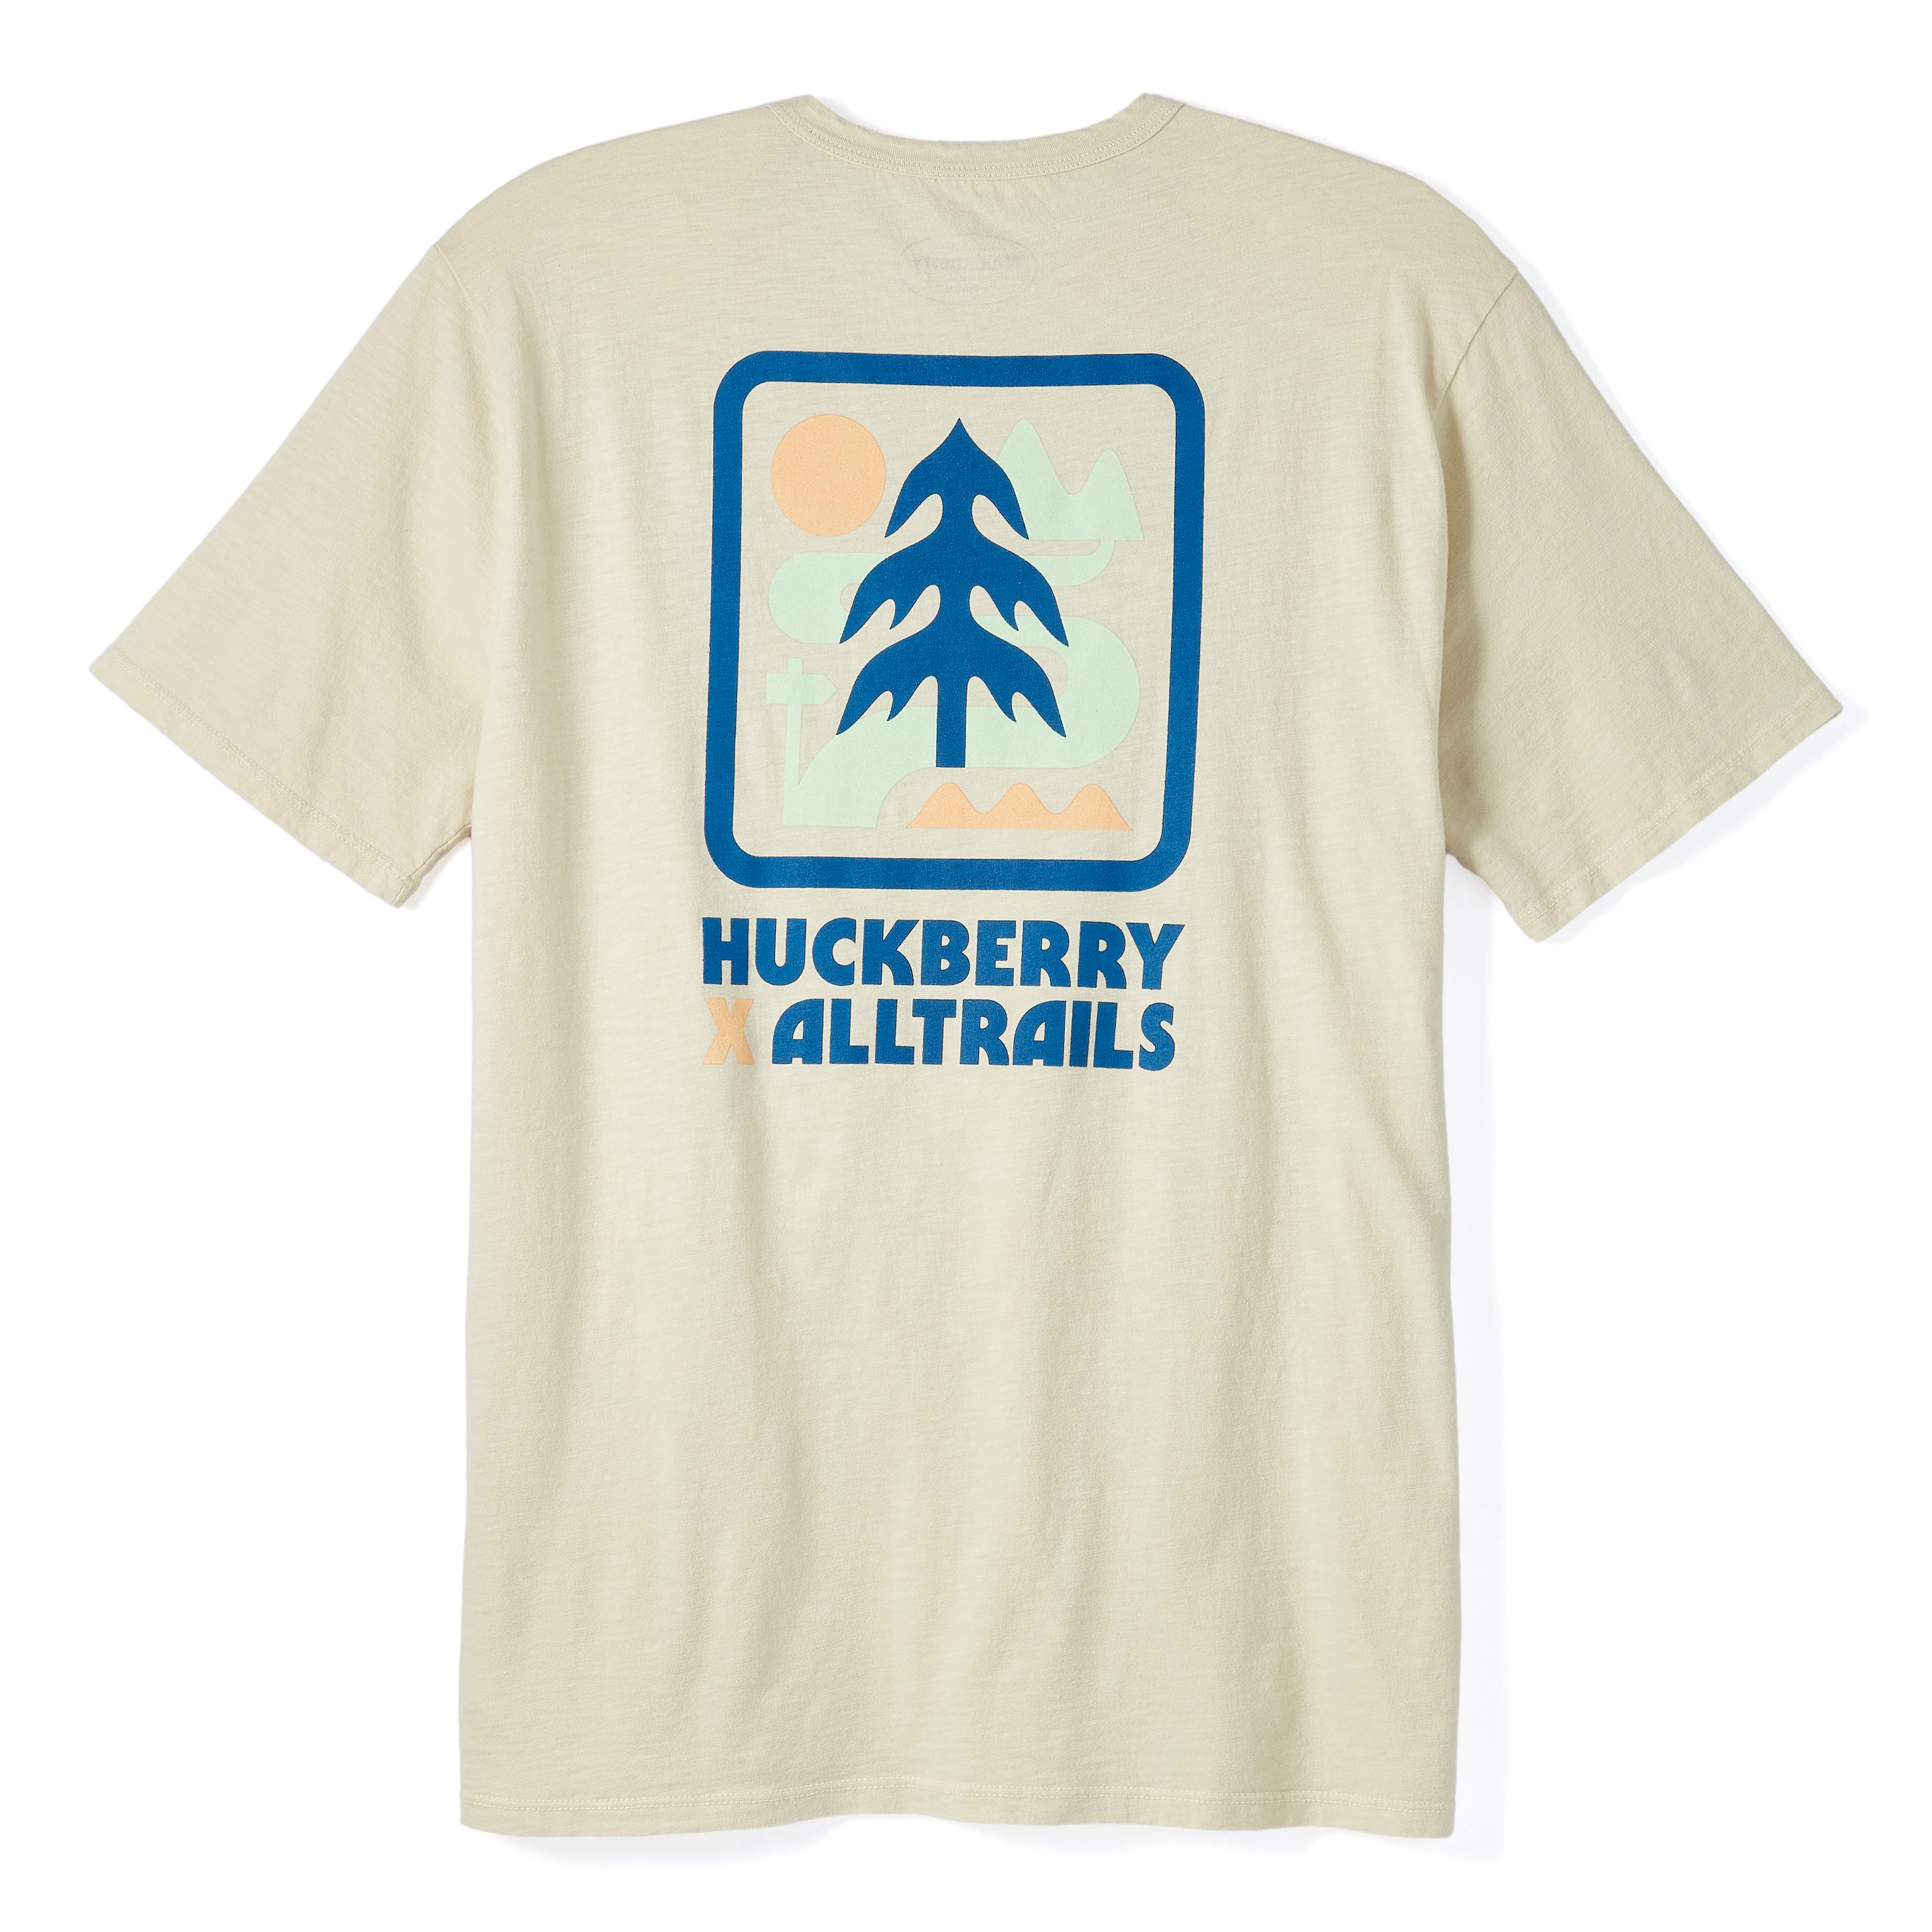 Huckberry x Alltrails Slub Tee